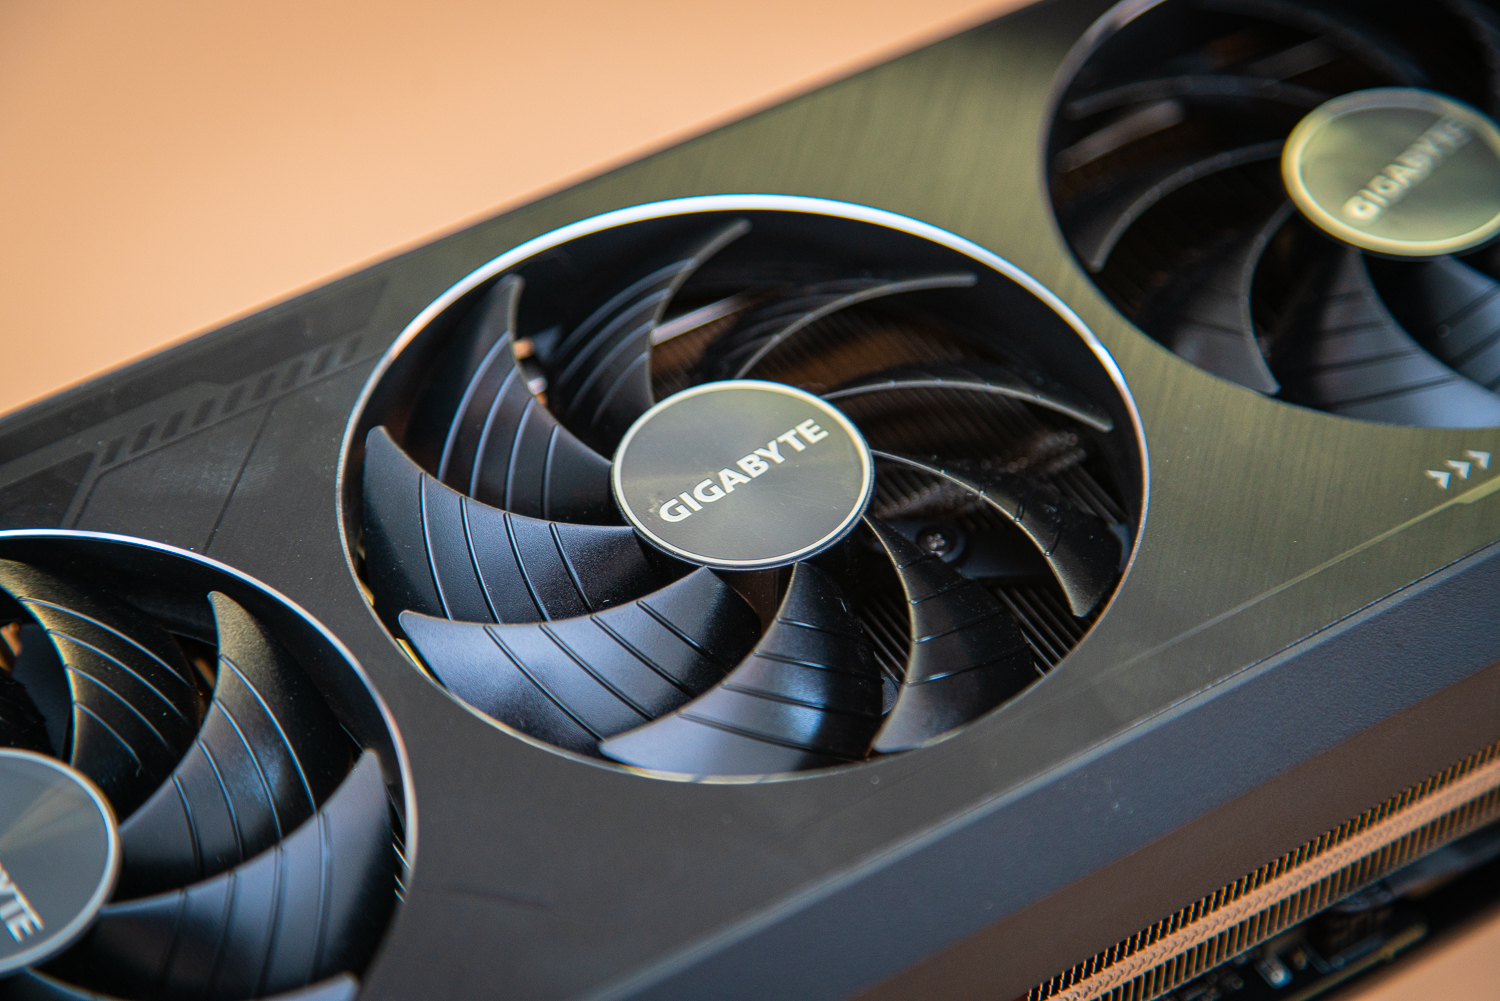 Gigabyte may have accidentally leaked the next Nvidia GPU